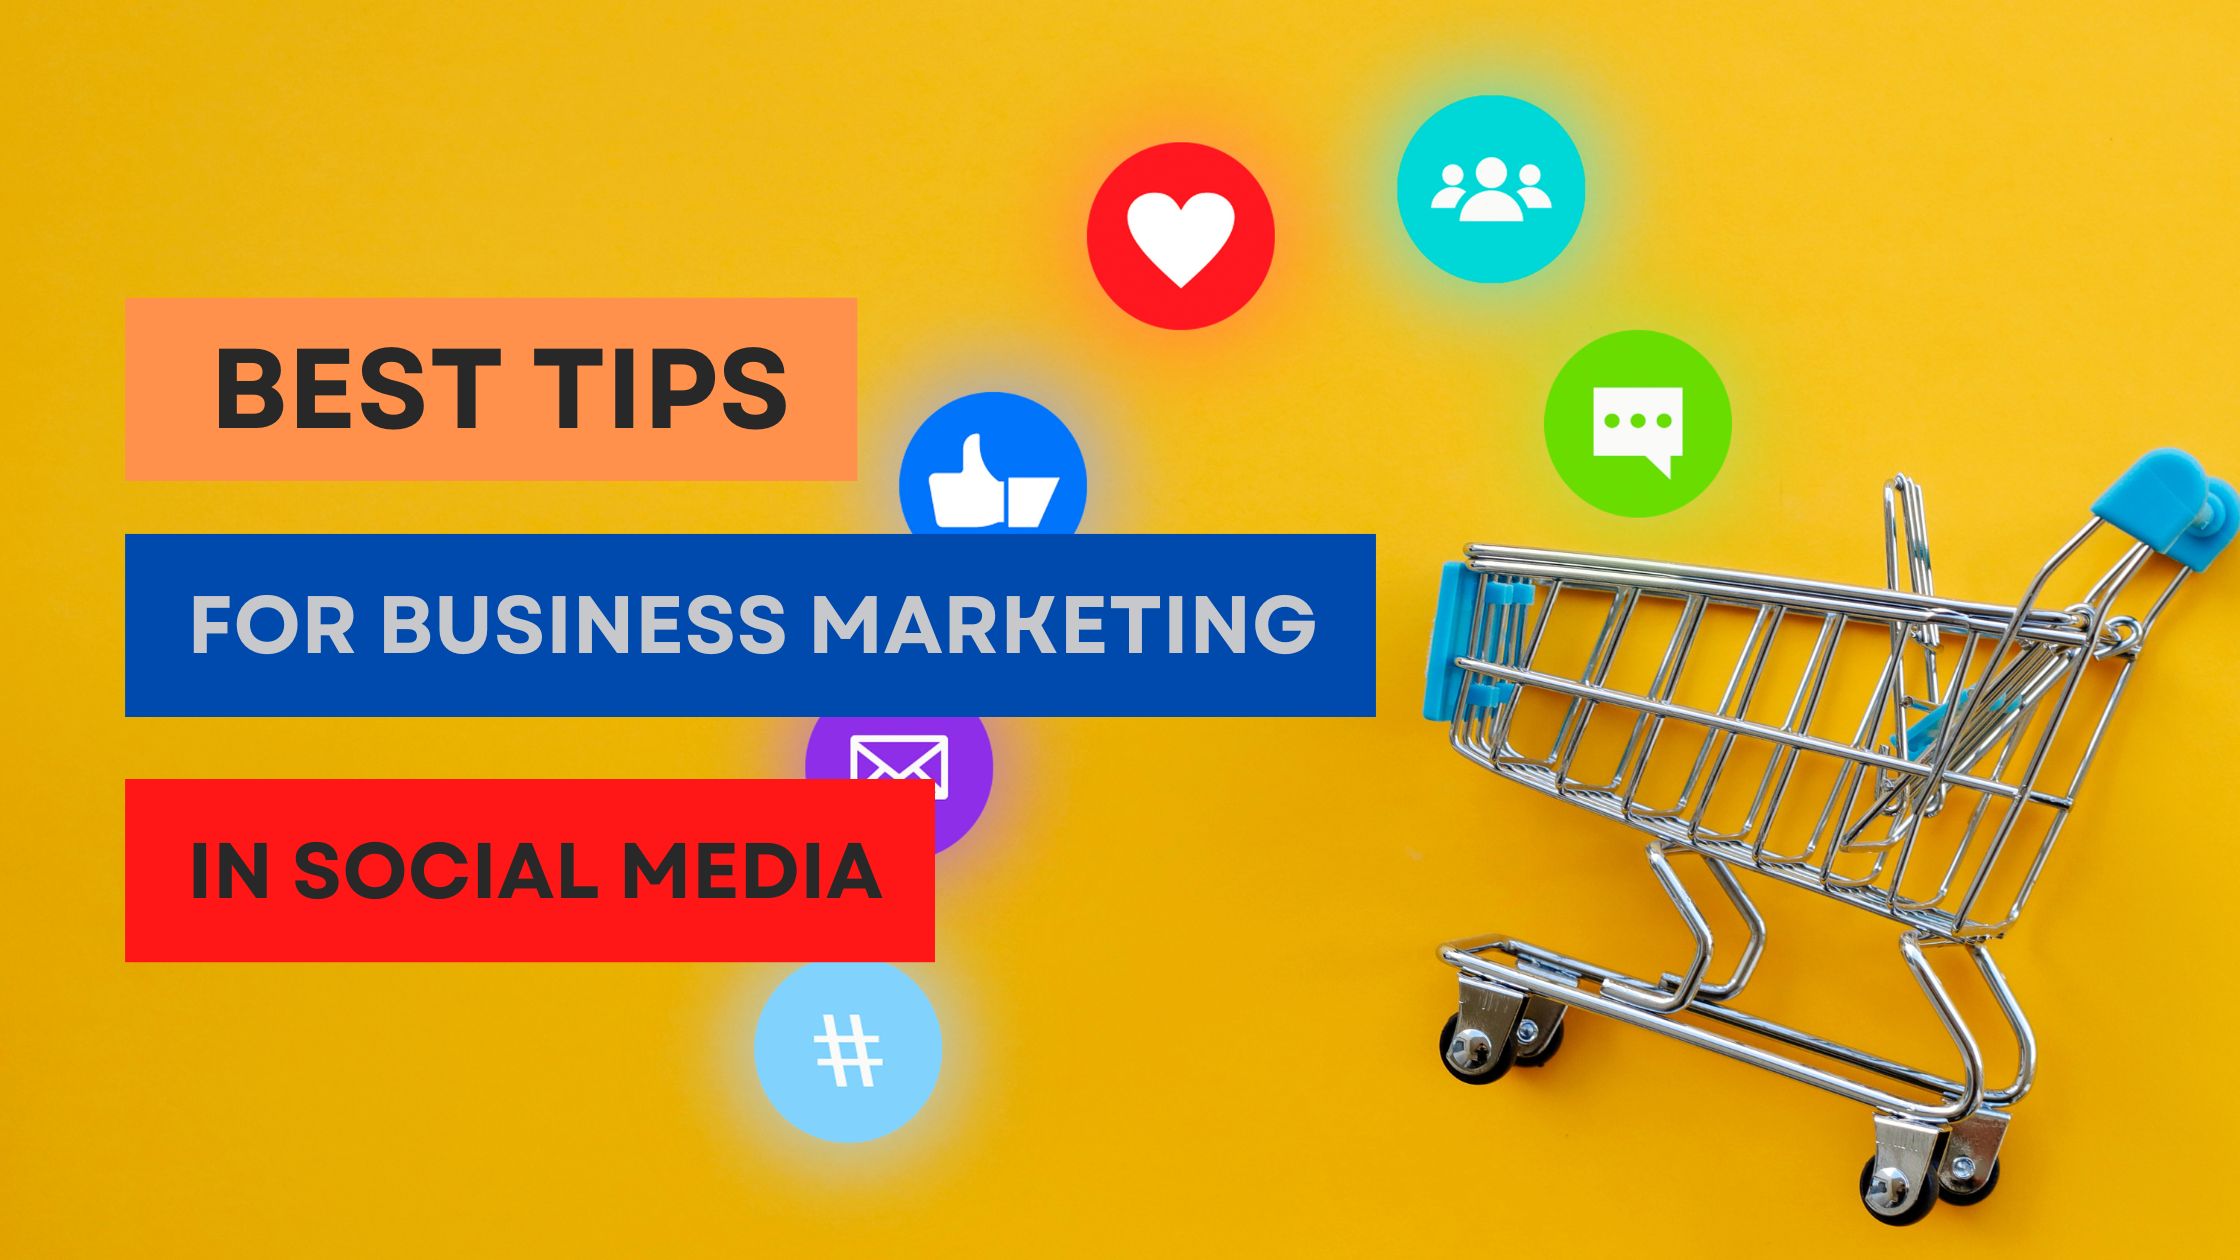 Business Marketing In Social Media